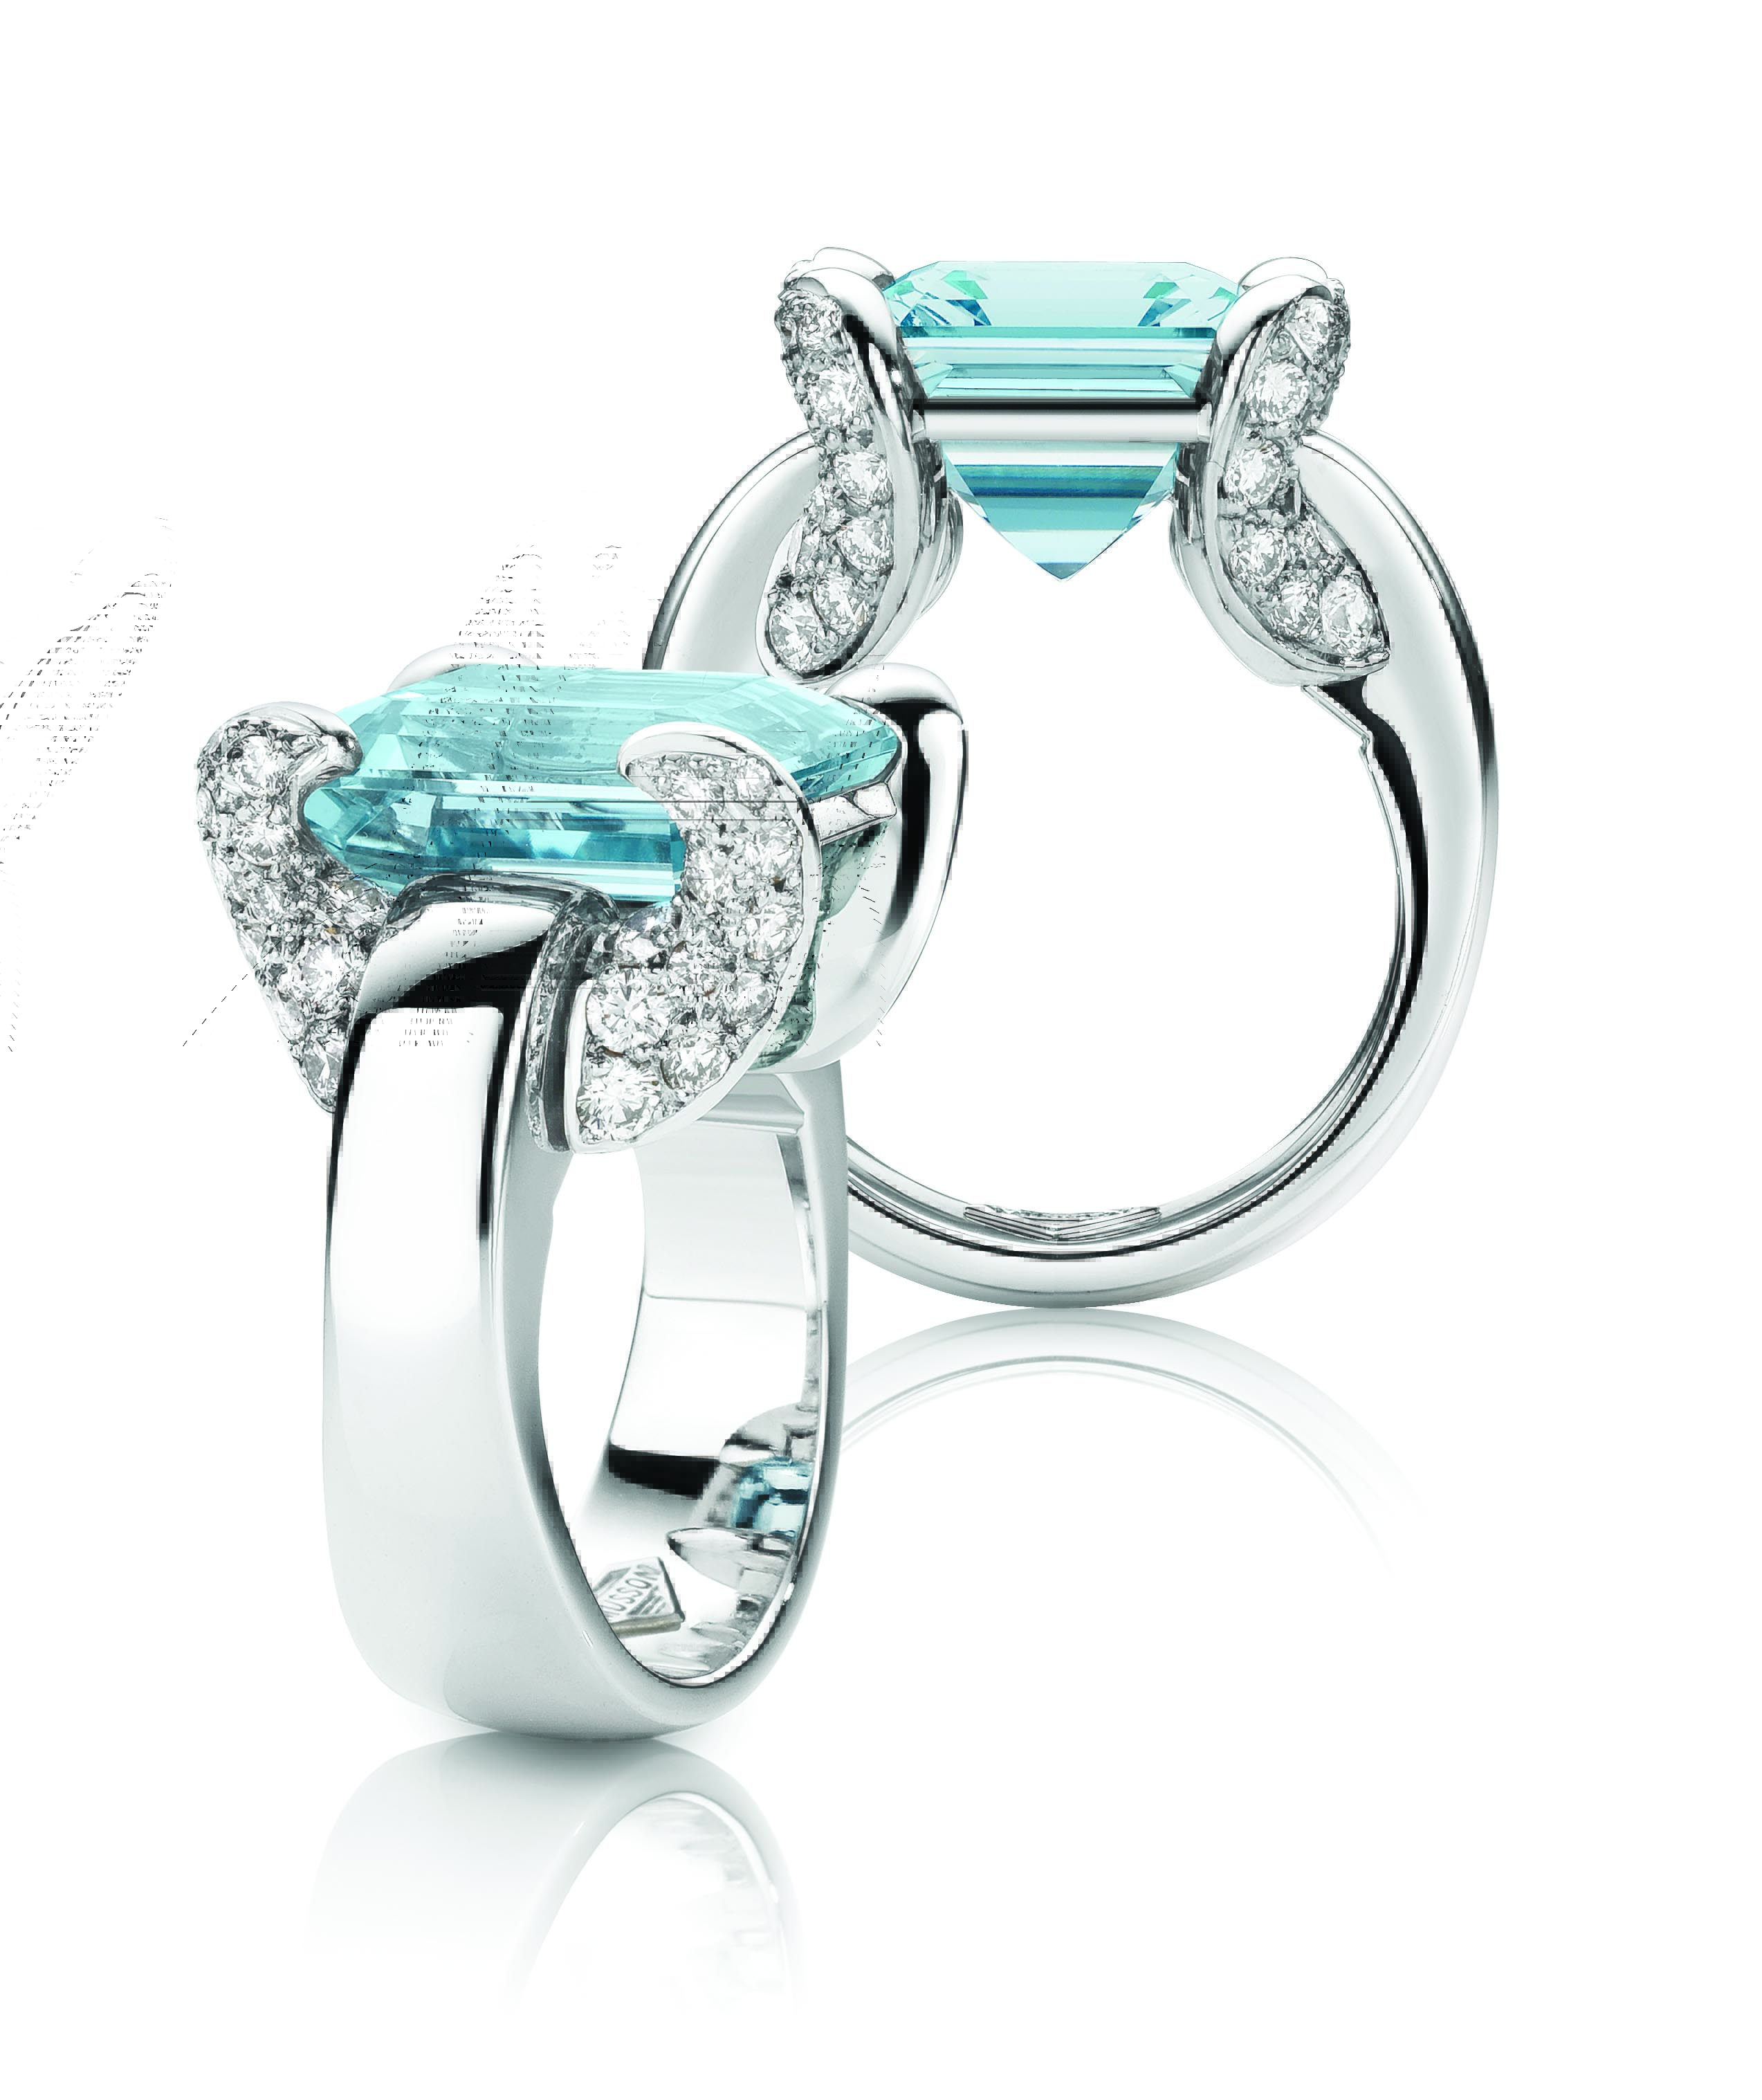 Aqua Marine and diamond rings